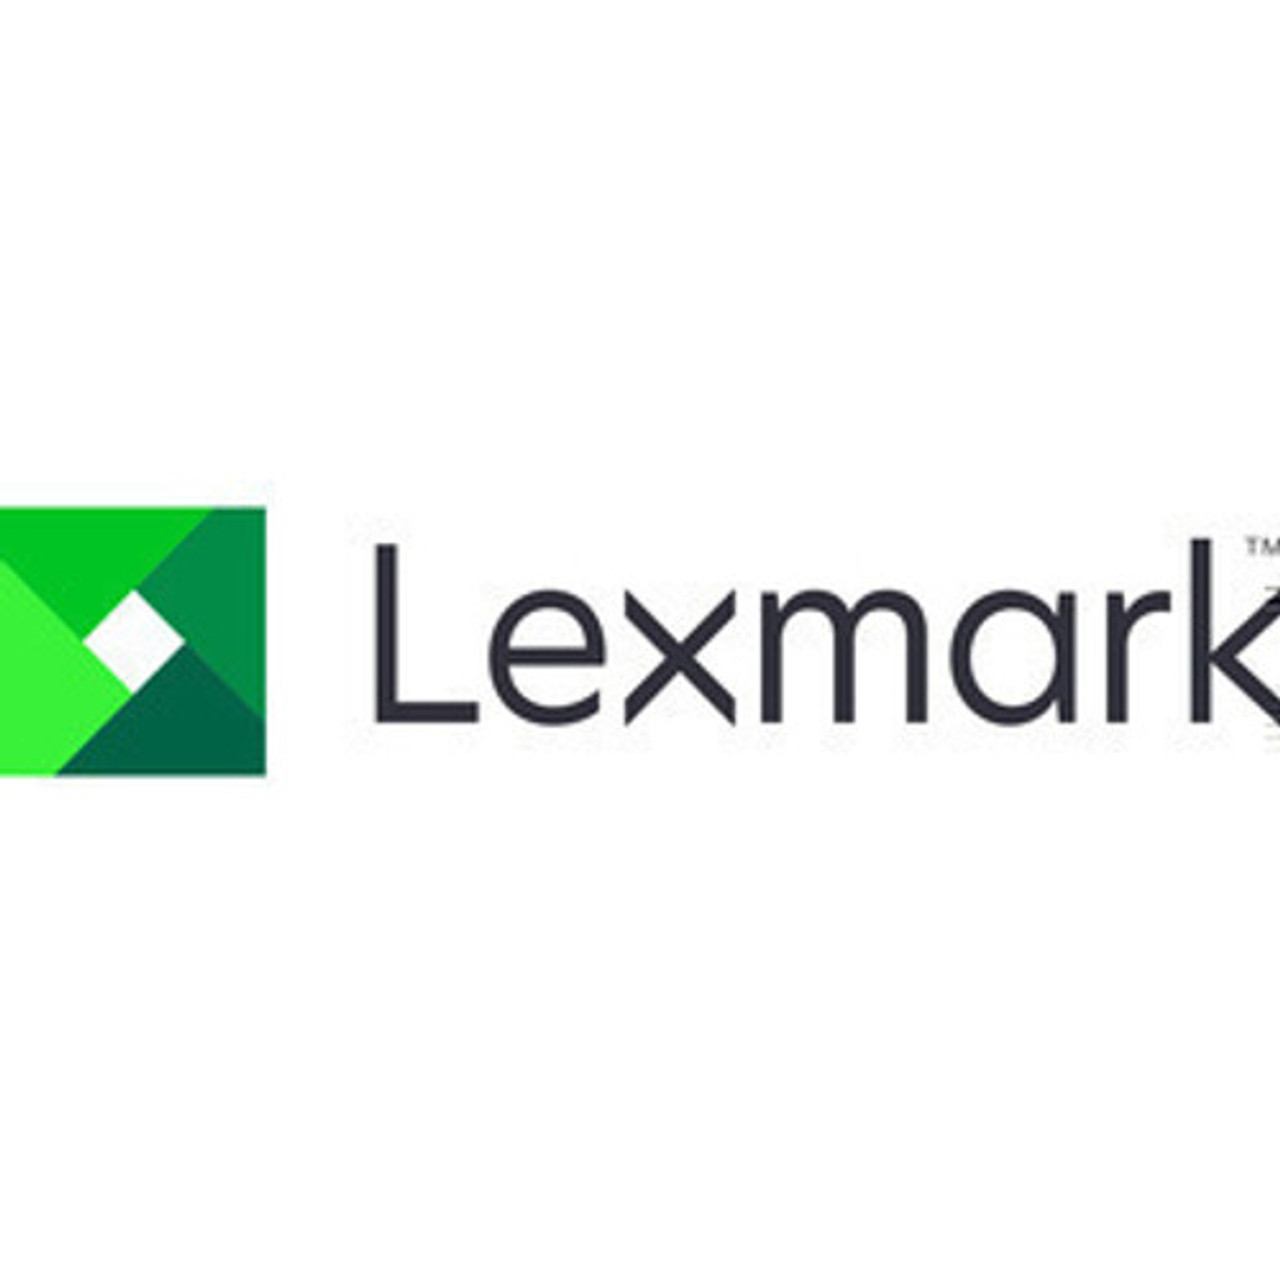 Lexmark HVPS/input sensor/toner sensor cable (harness) assembly - 40X0223